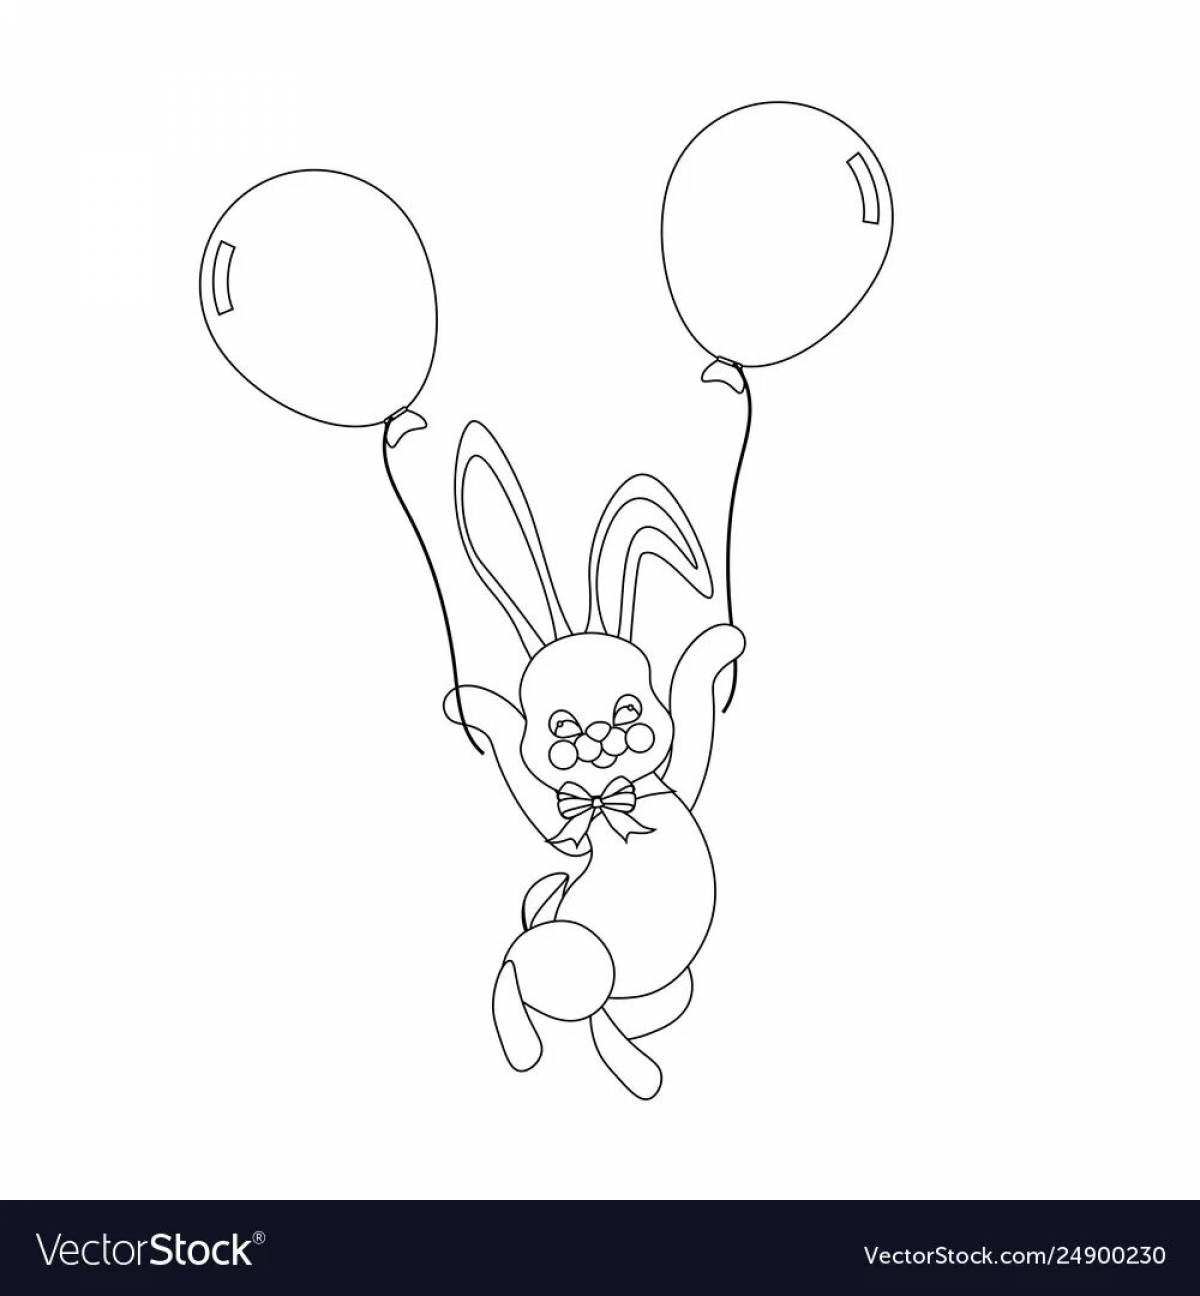 Balloon bunny #1